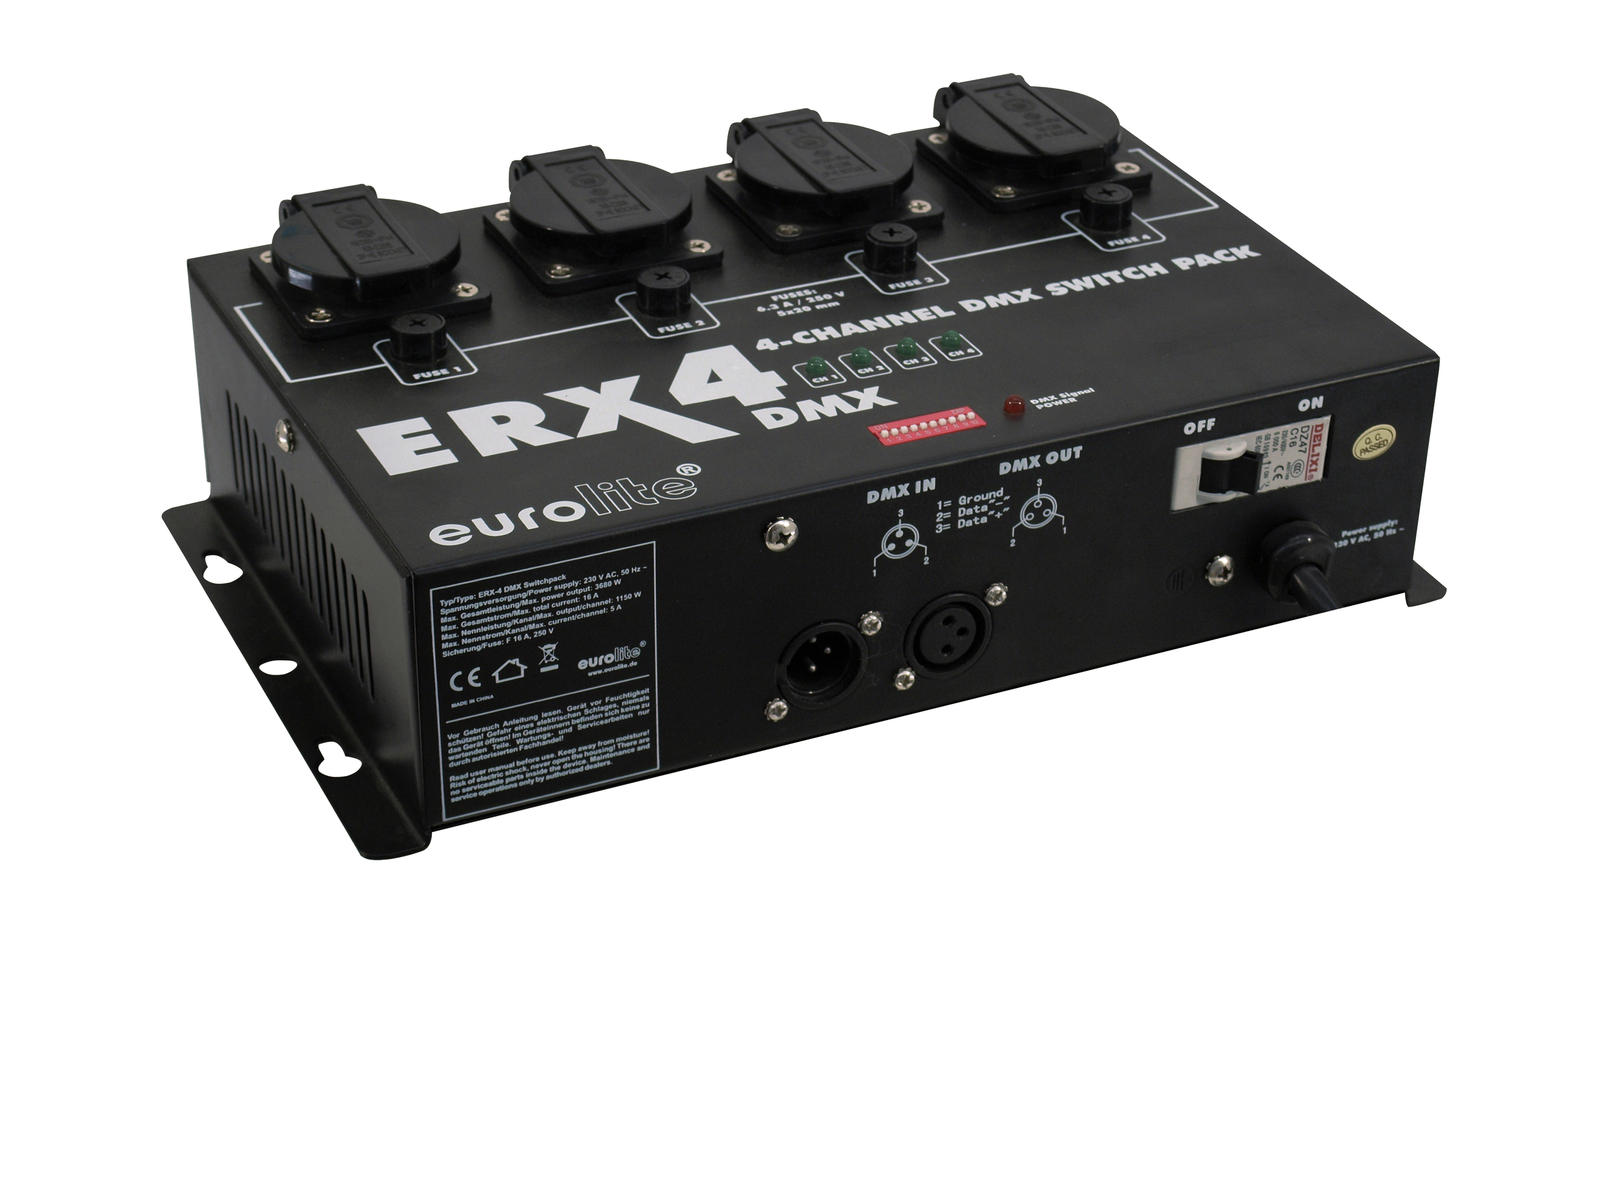 EUROLITE ERX-4 DMX Switchpack